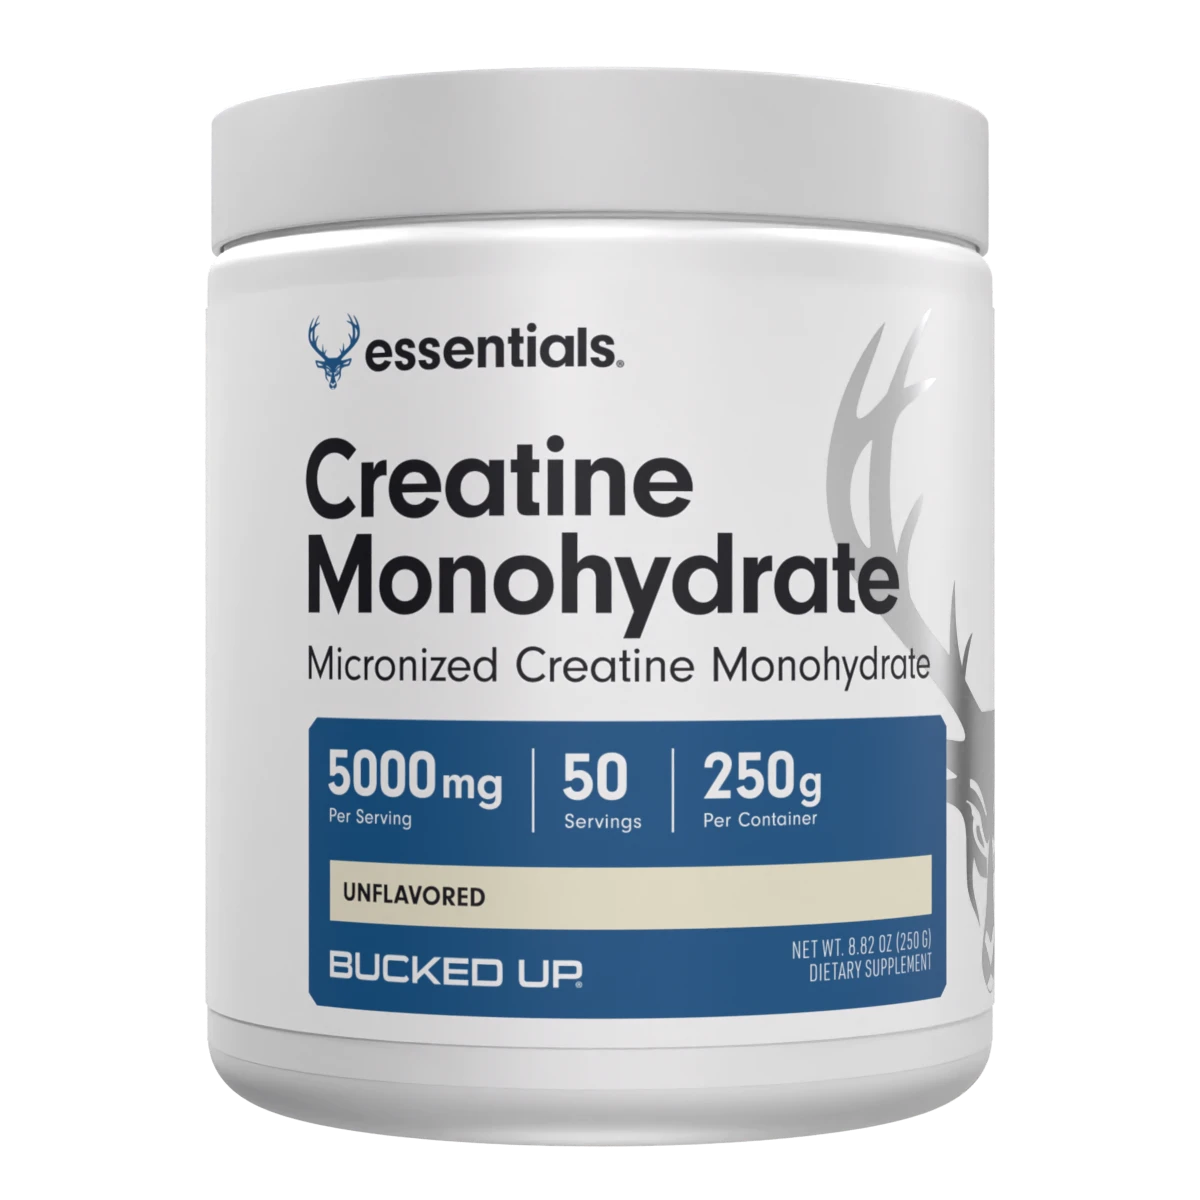 Micronized Creatine Monohydrate Powder 5000mg - Pure Creatine